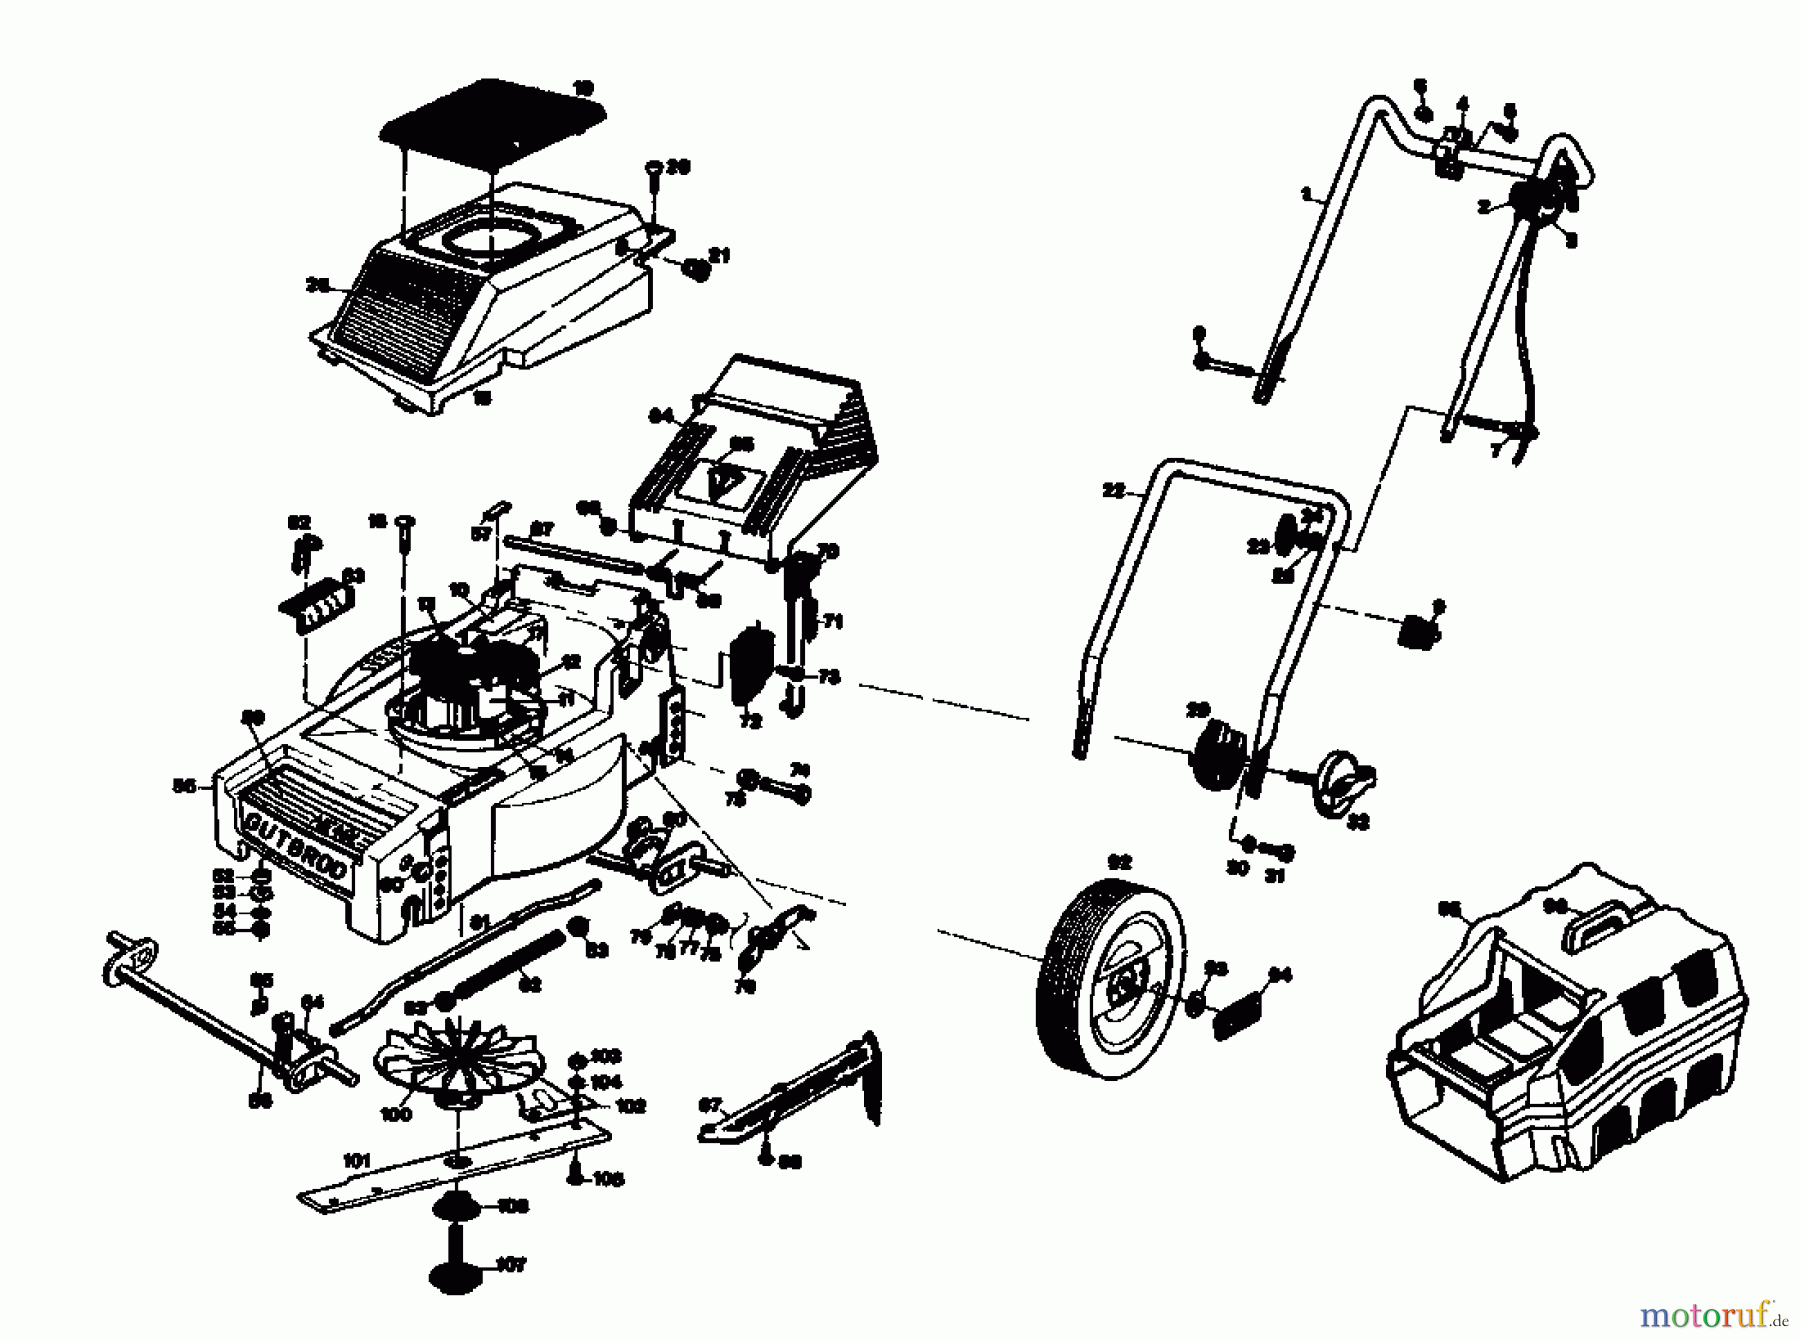  Gutbrod Electric mower HE 40 L 02895.01  (1986) Basic machine